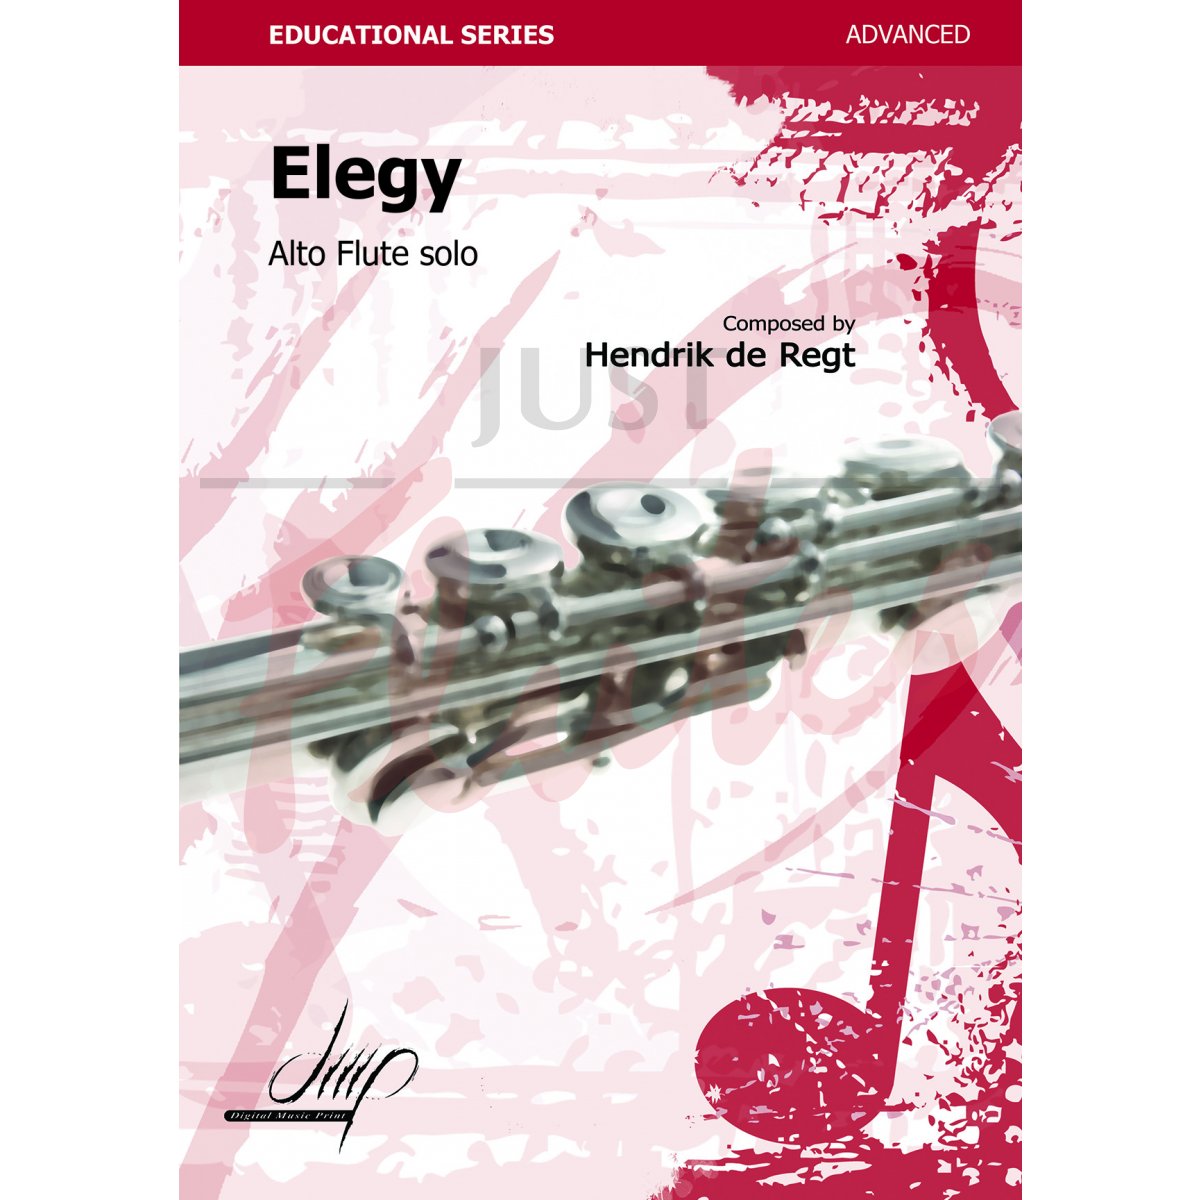 Elegy (Alto flute solo)